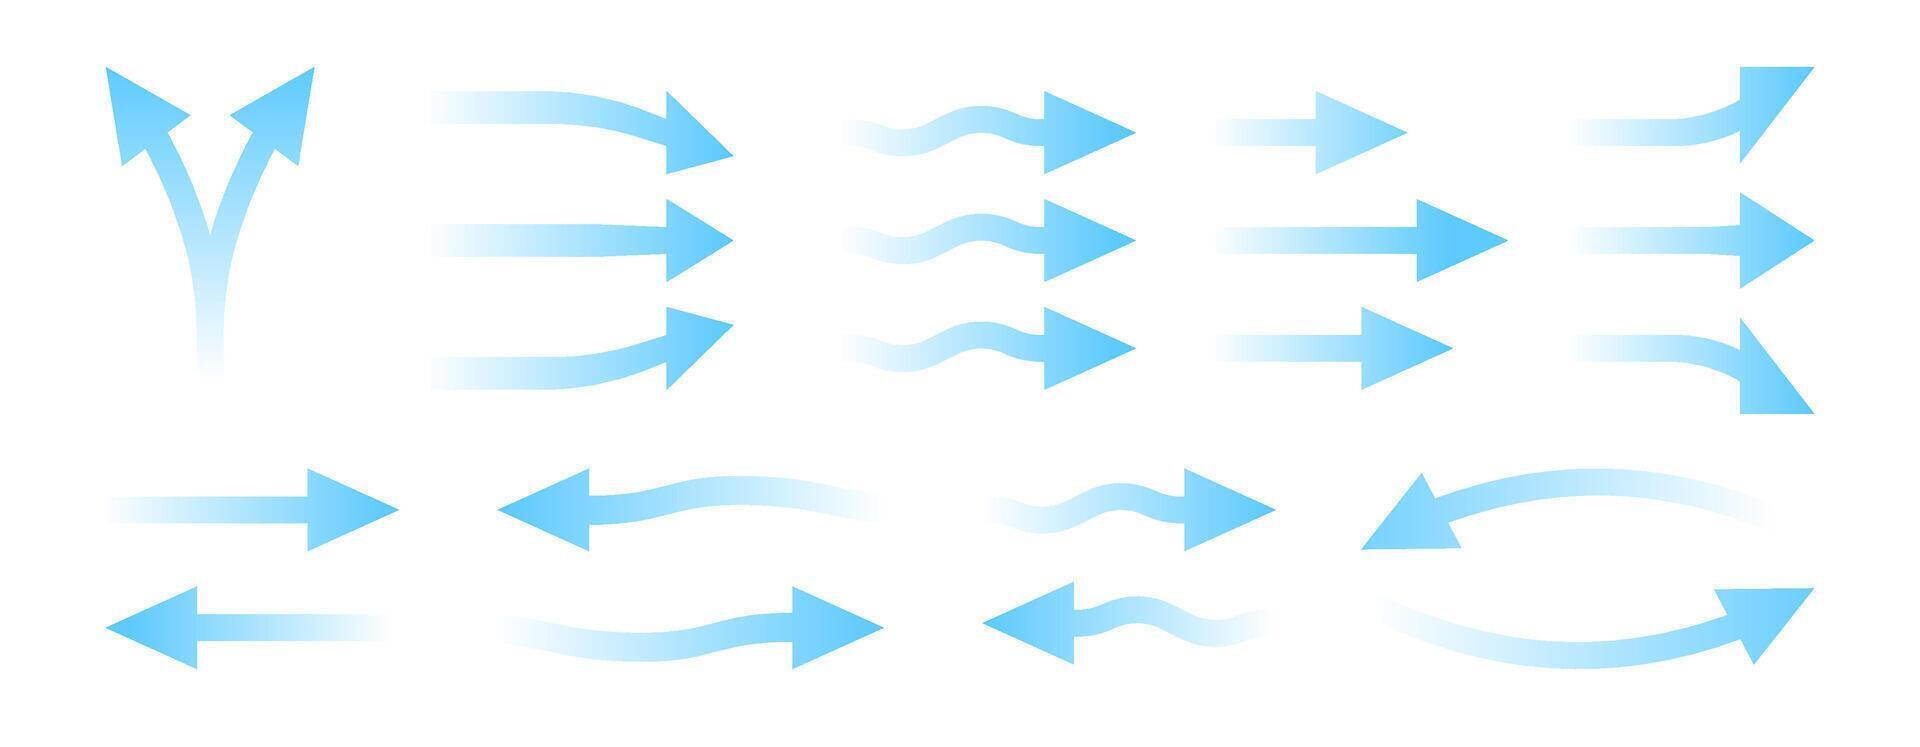 lucht stromen pictogrammen. reeks van lucht conditioner stroom richting, lucht luchtreiniger en ventilator pijl toetsen, stromen effect concept. vector geïsoleerd reeks